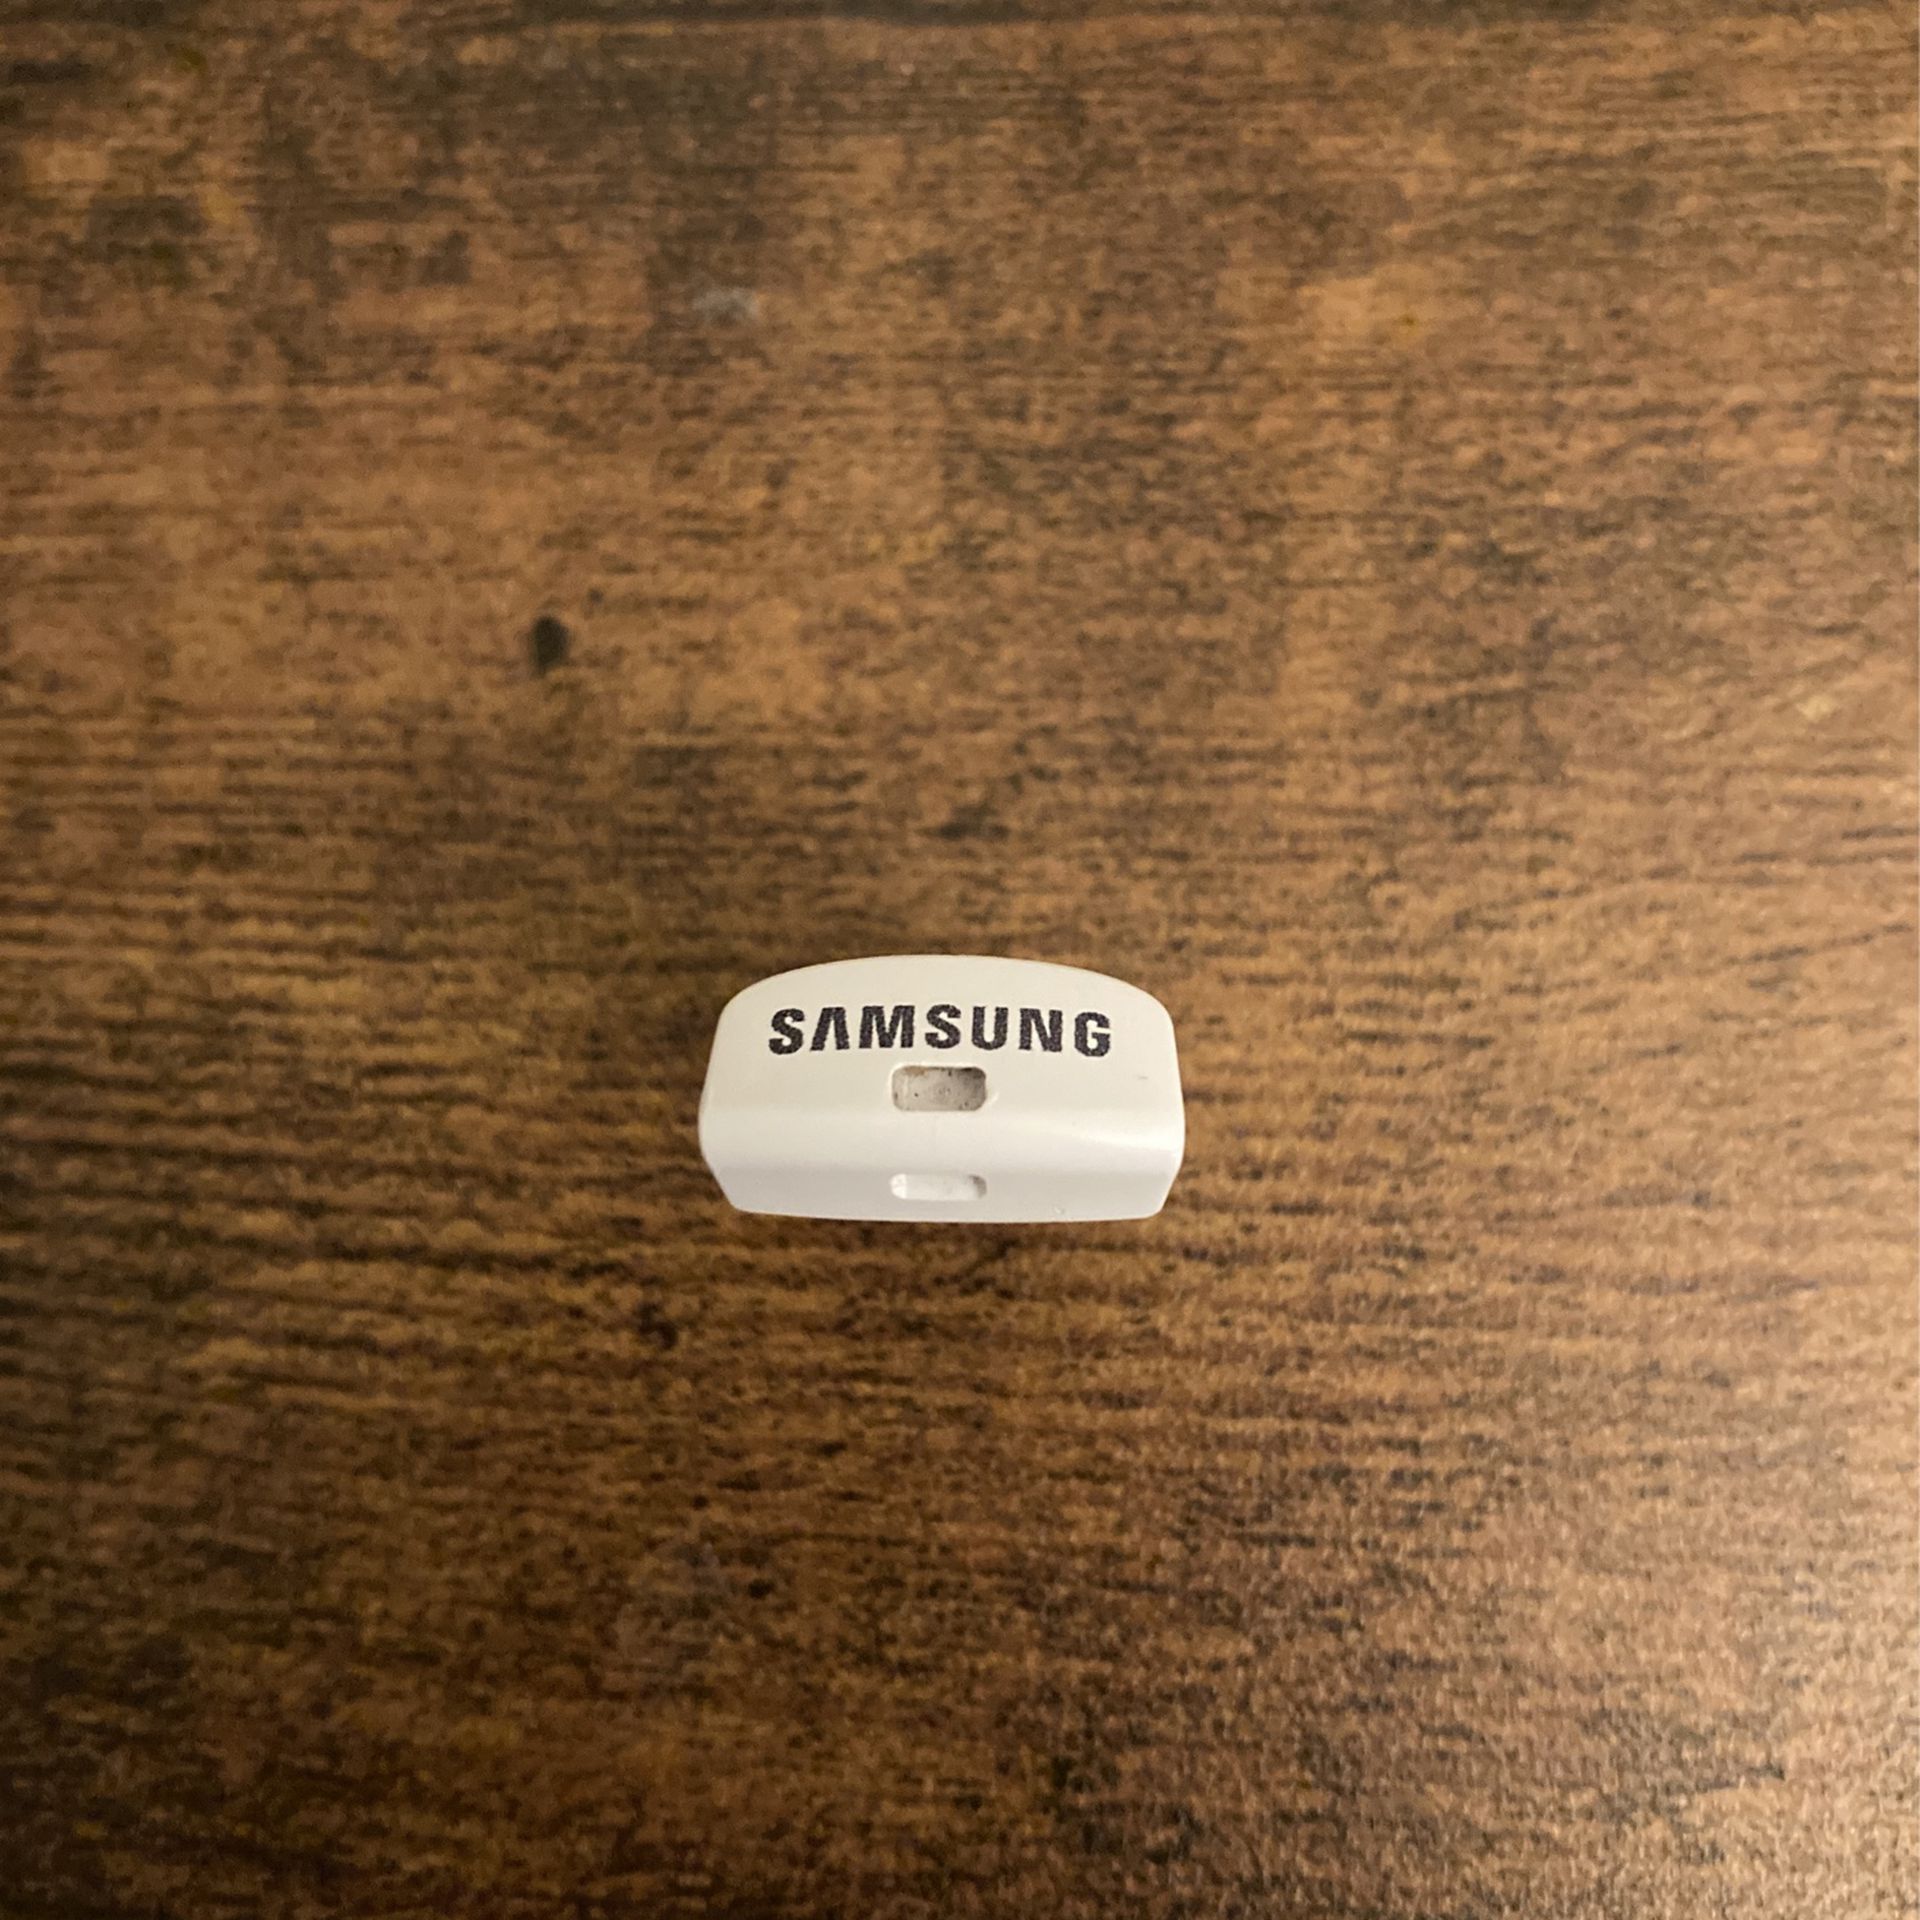 Samsung 32 USB 3.0 Flash Drive